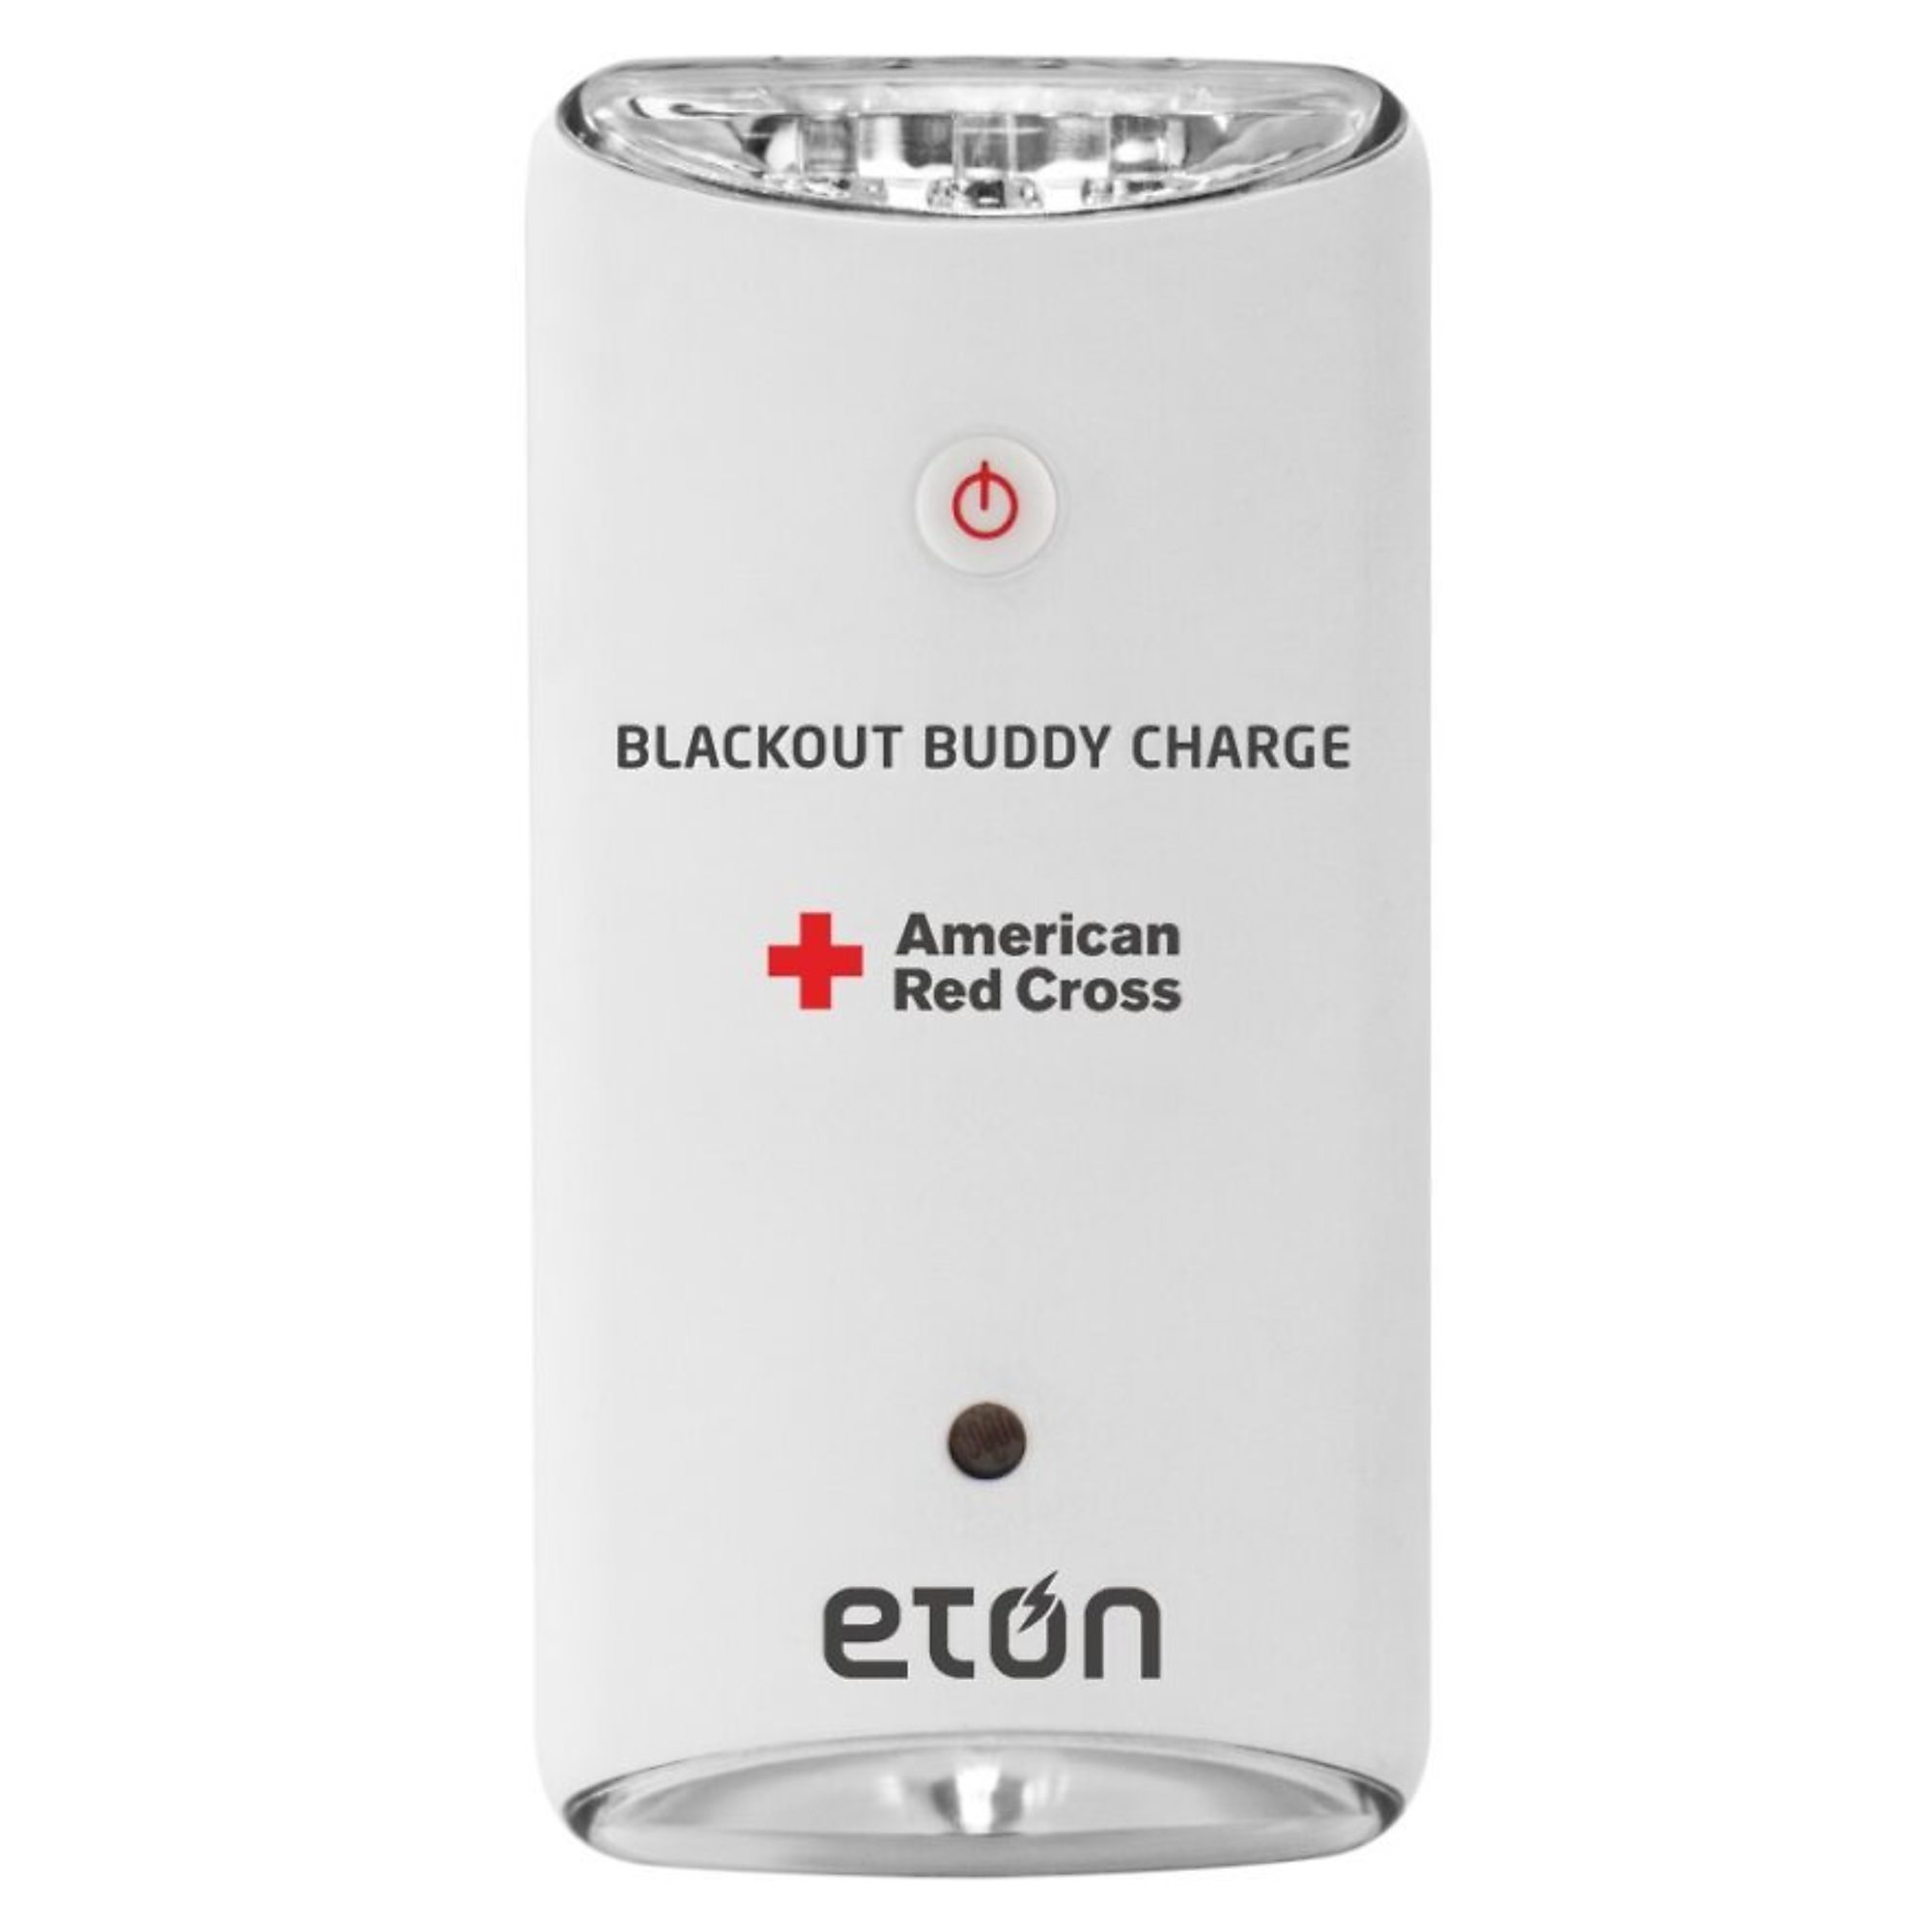 eton American Red Cross, Blackout Buddy Charge flashlight, Light Bulb Type LED, Watts 1 Model ARCBB300W-SNG